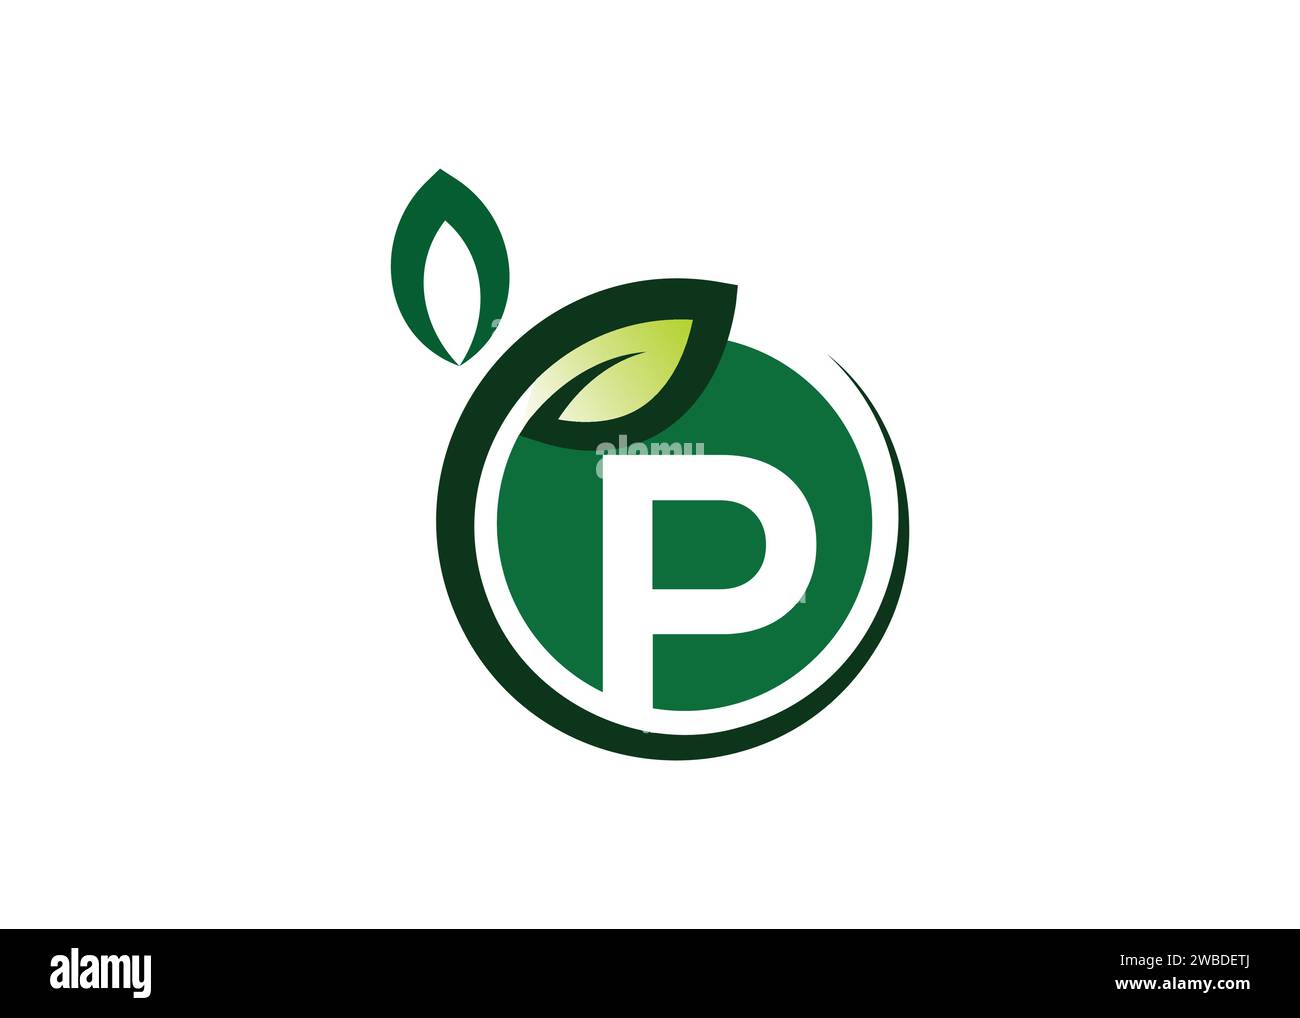 Letter P Green Leaf Logo Design Vektorvorlage. Letter P Nature Growth Leaf Vector Logo Stock Vektor